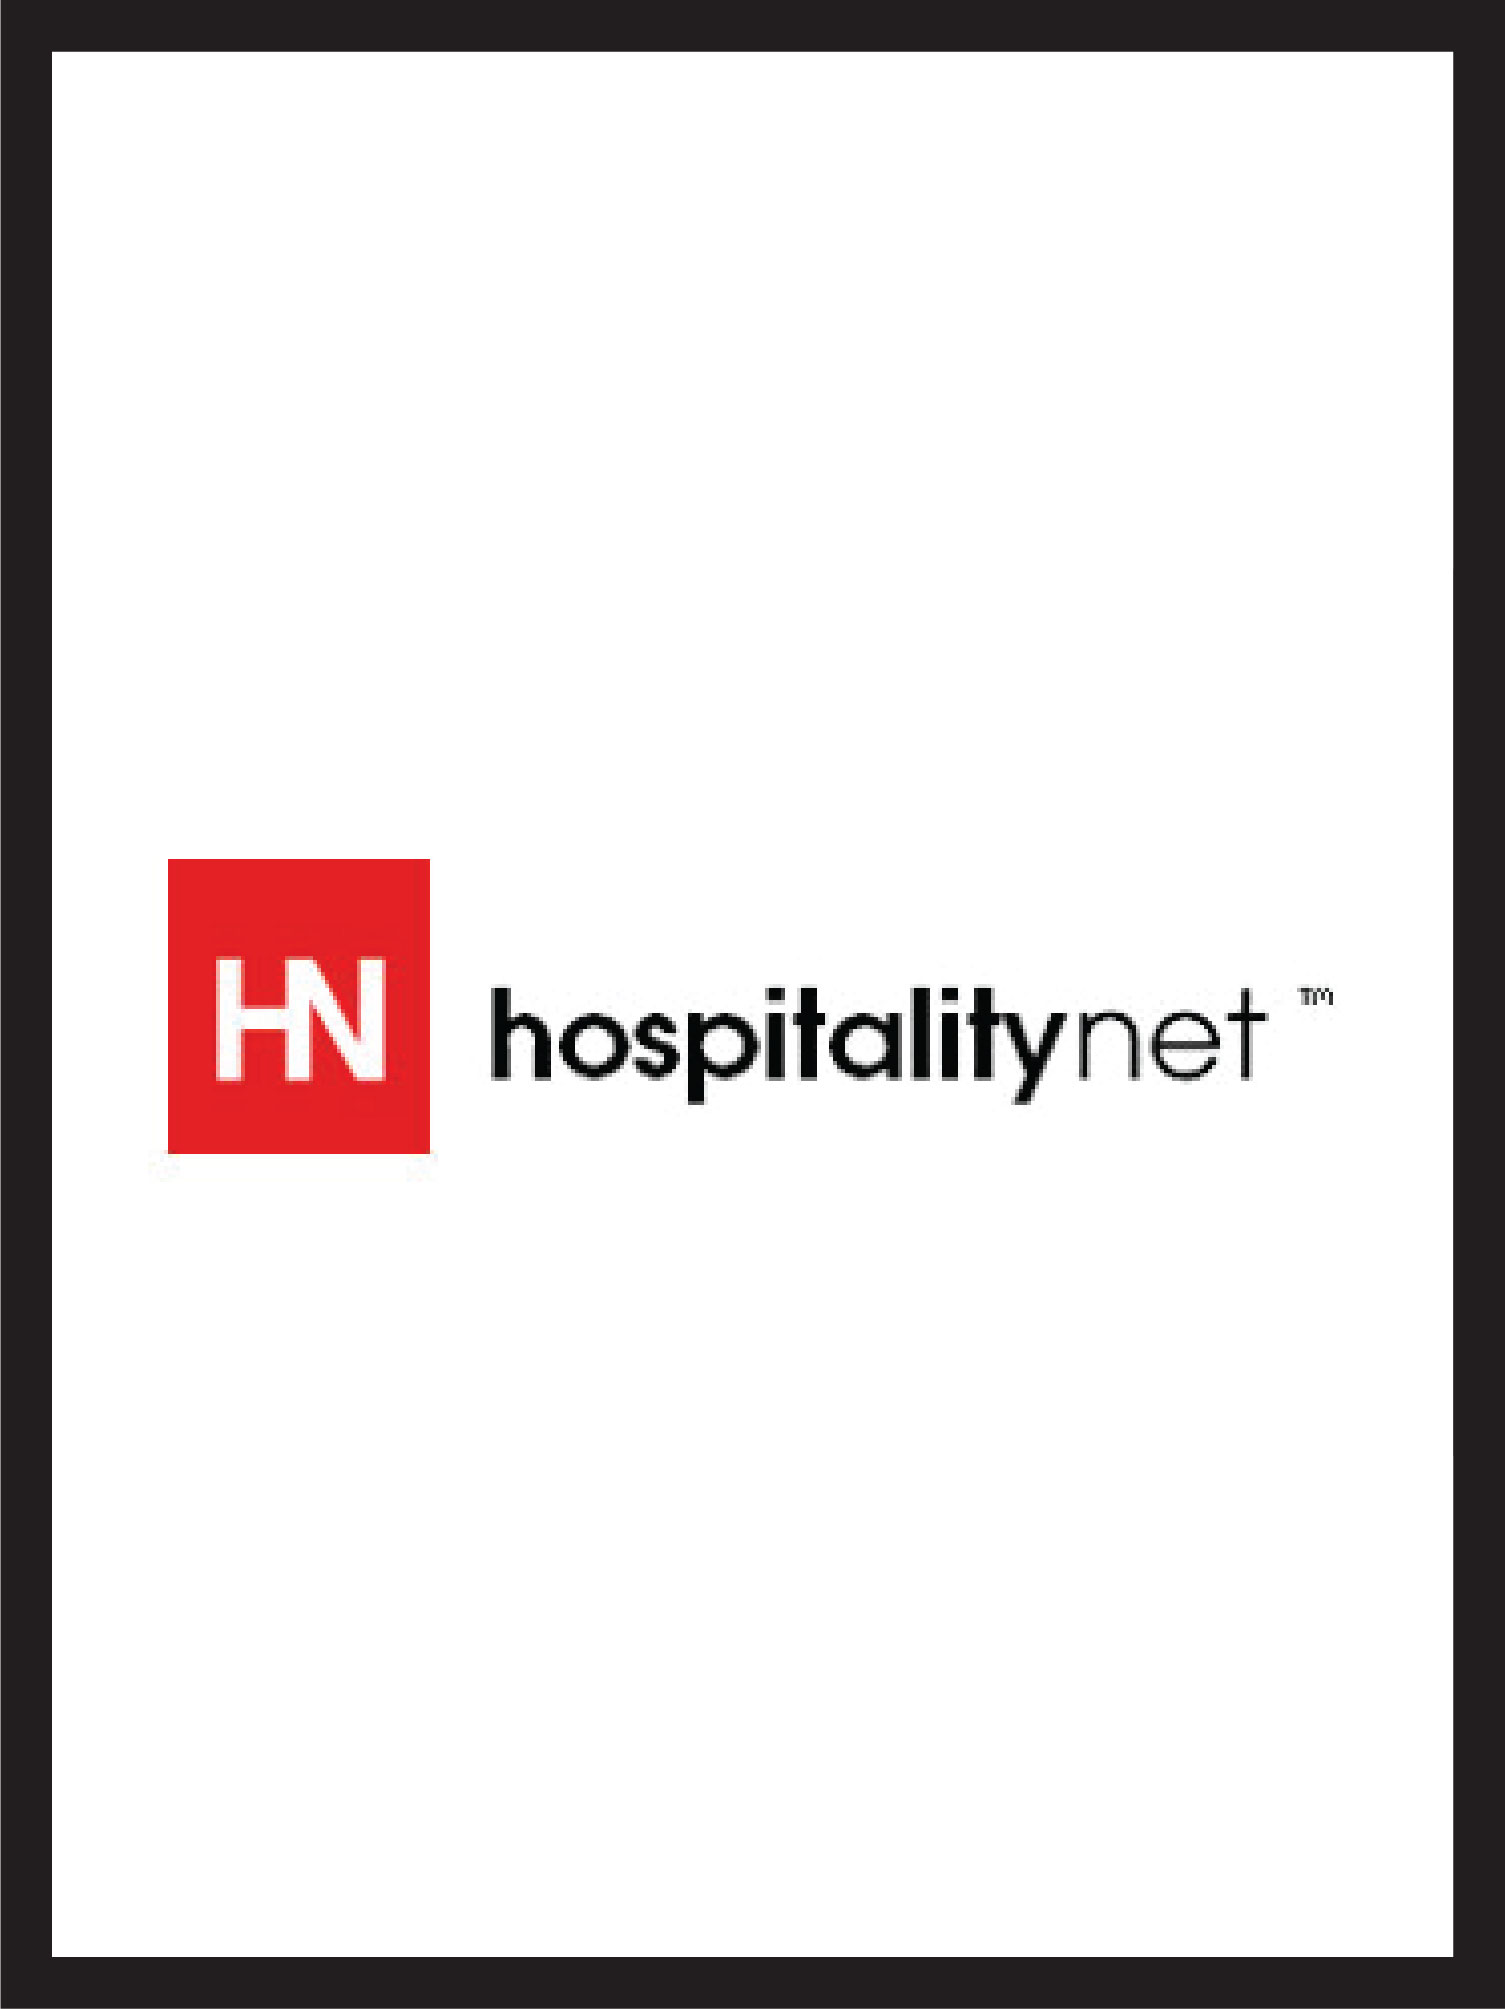 couverture et logo hospitality net